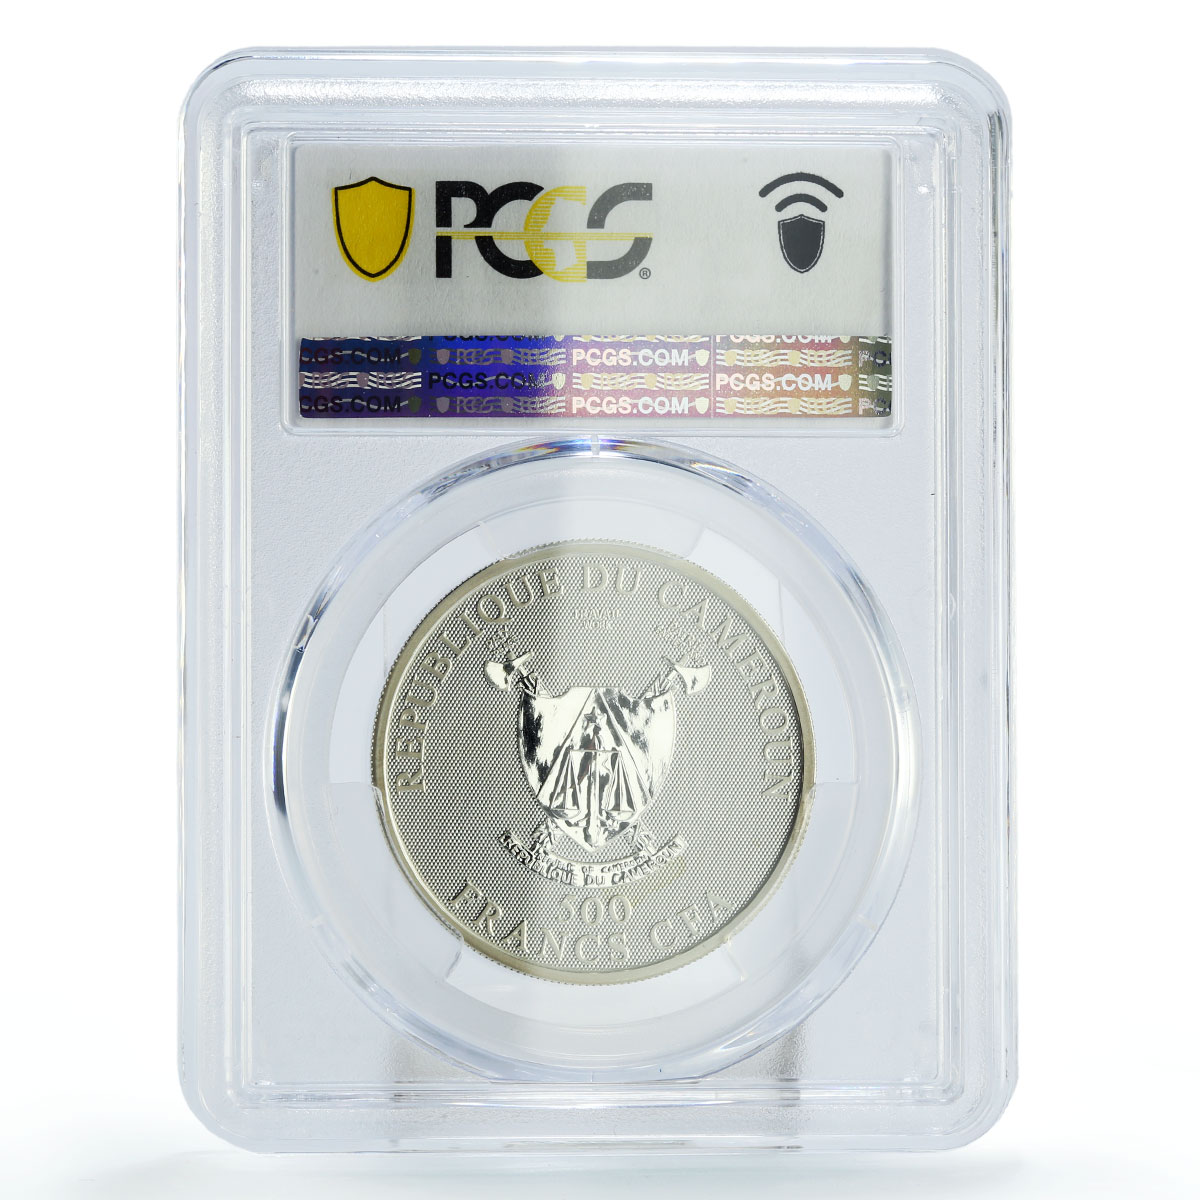 Cameroon 500 francs Zodiac Signs Leo Hologram PR69 PCGS silver coin 2010